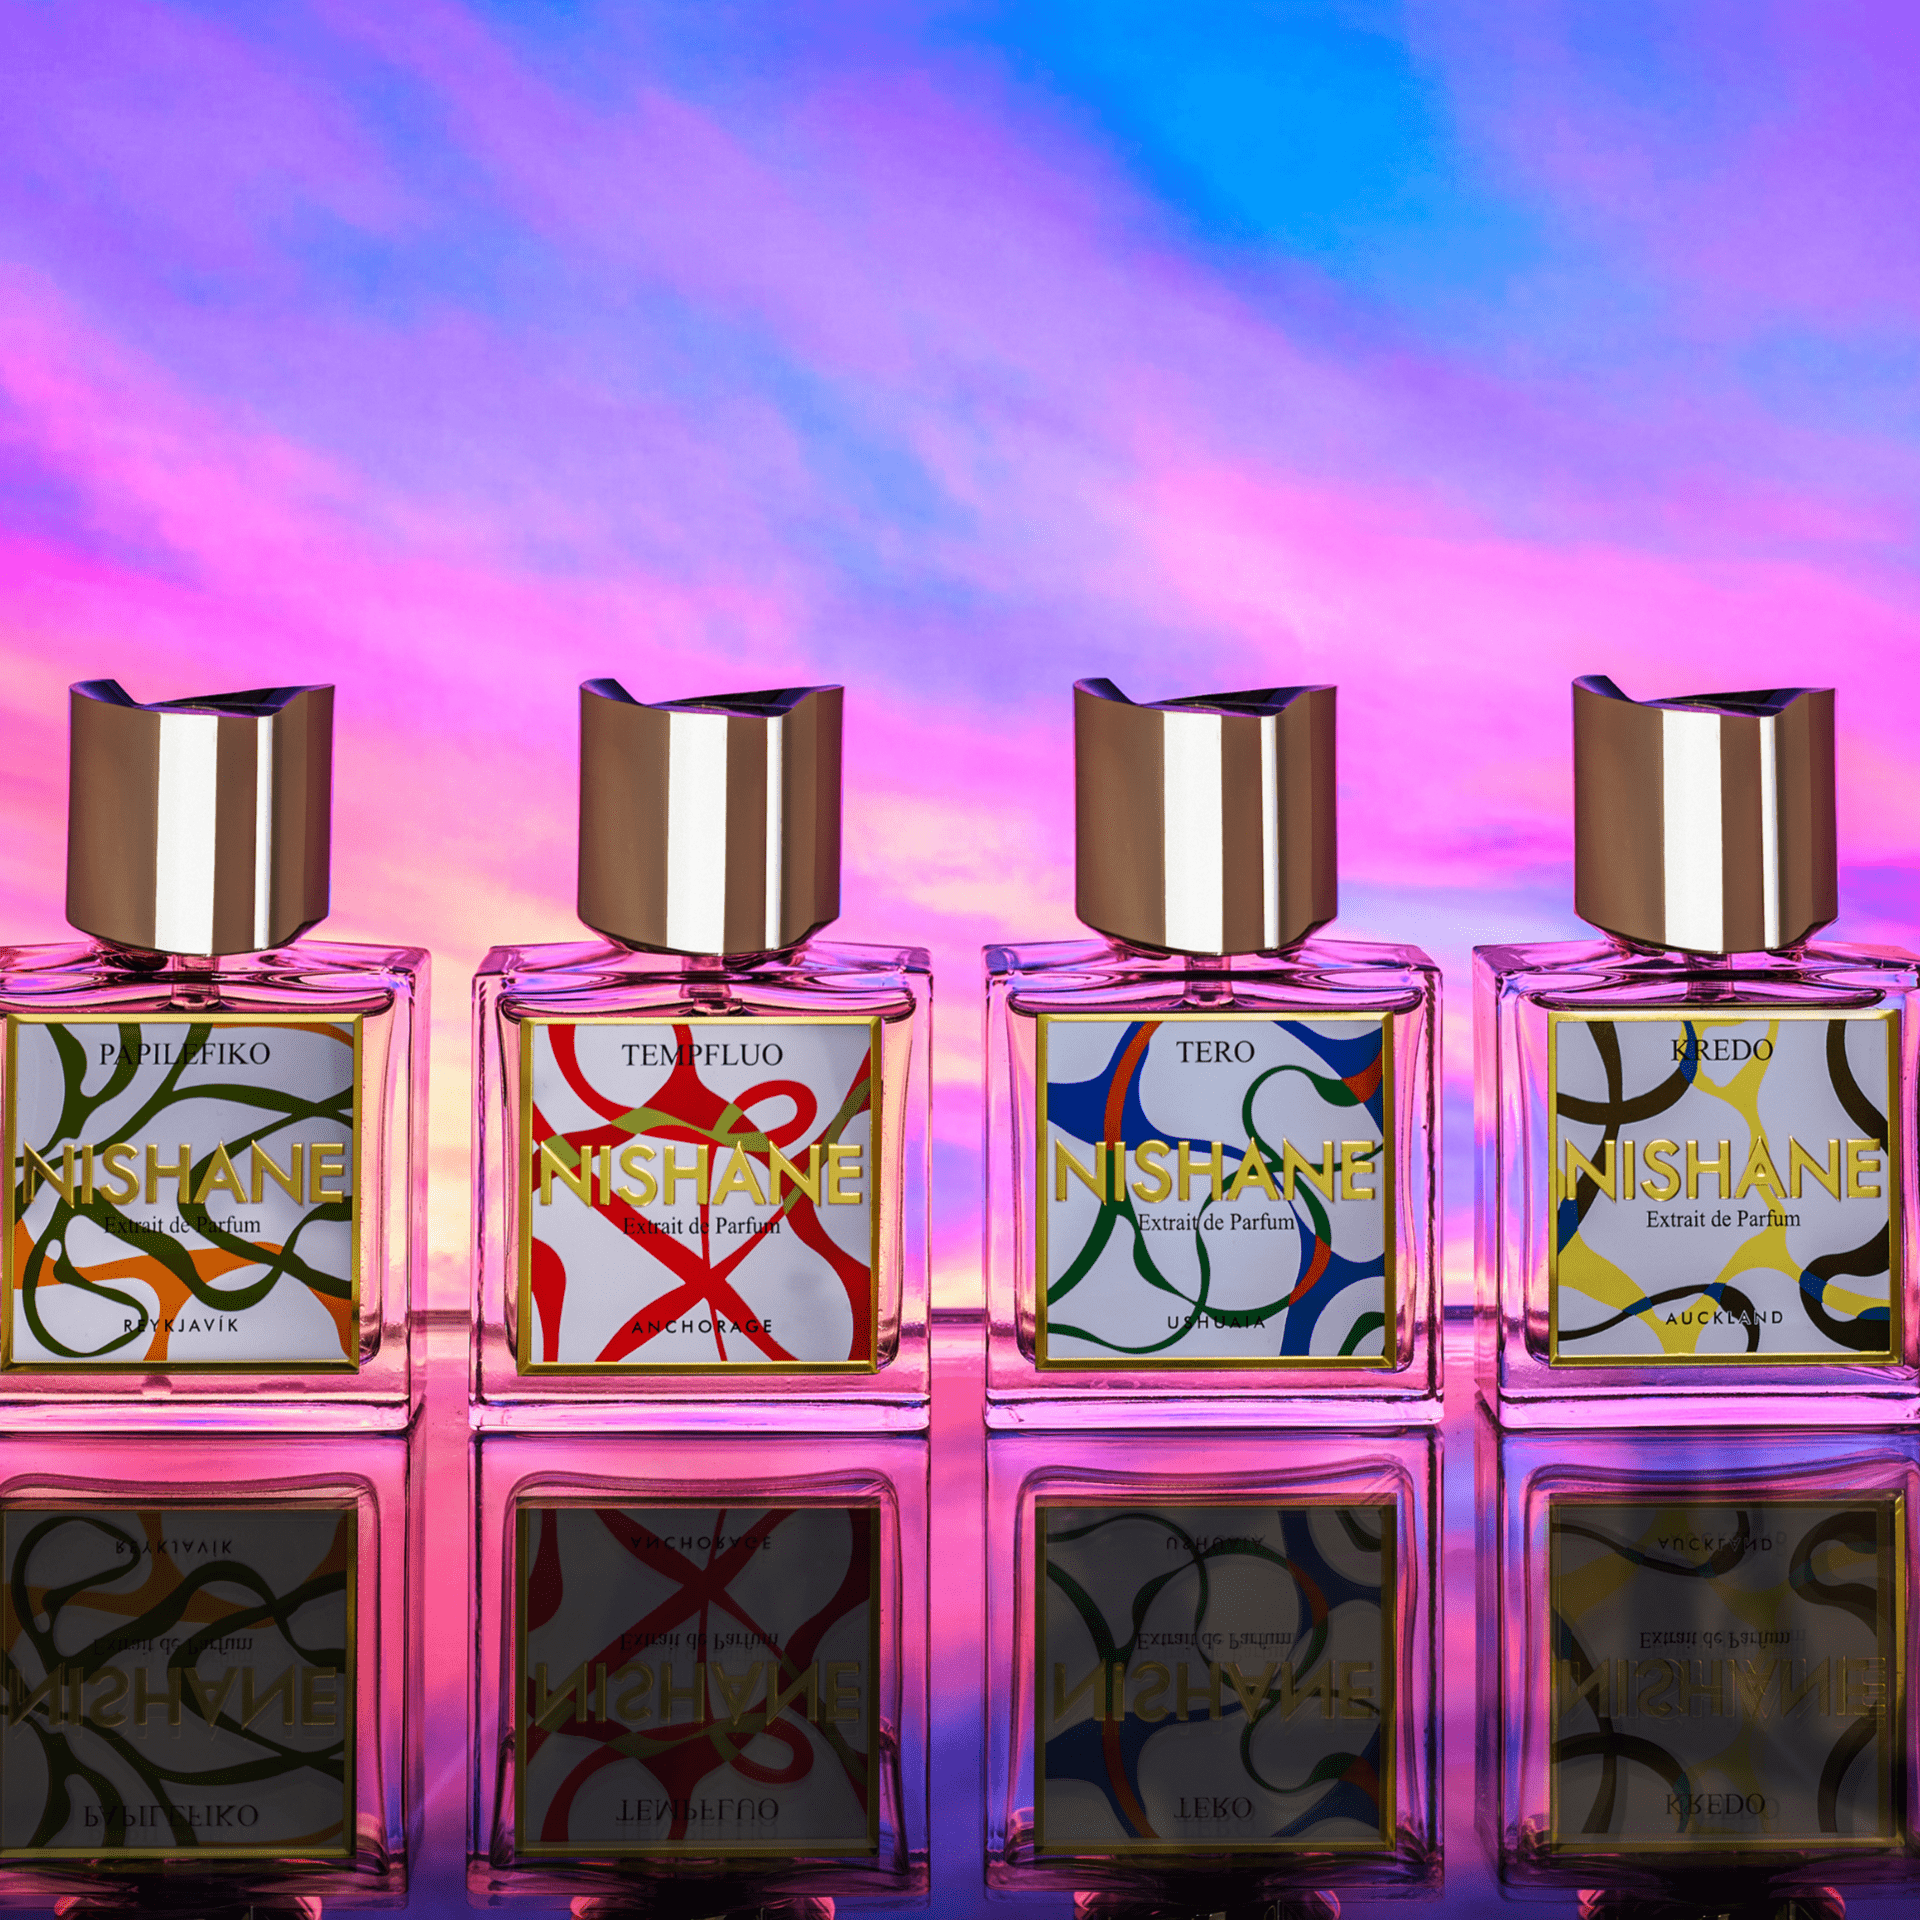 Nishane Kredo Extrait De Parfum | My Perfume Shop Australia